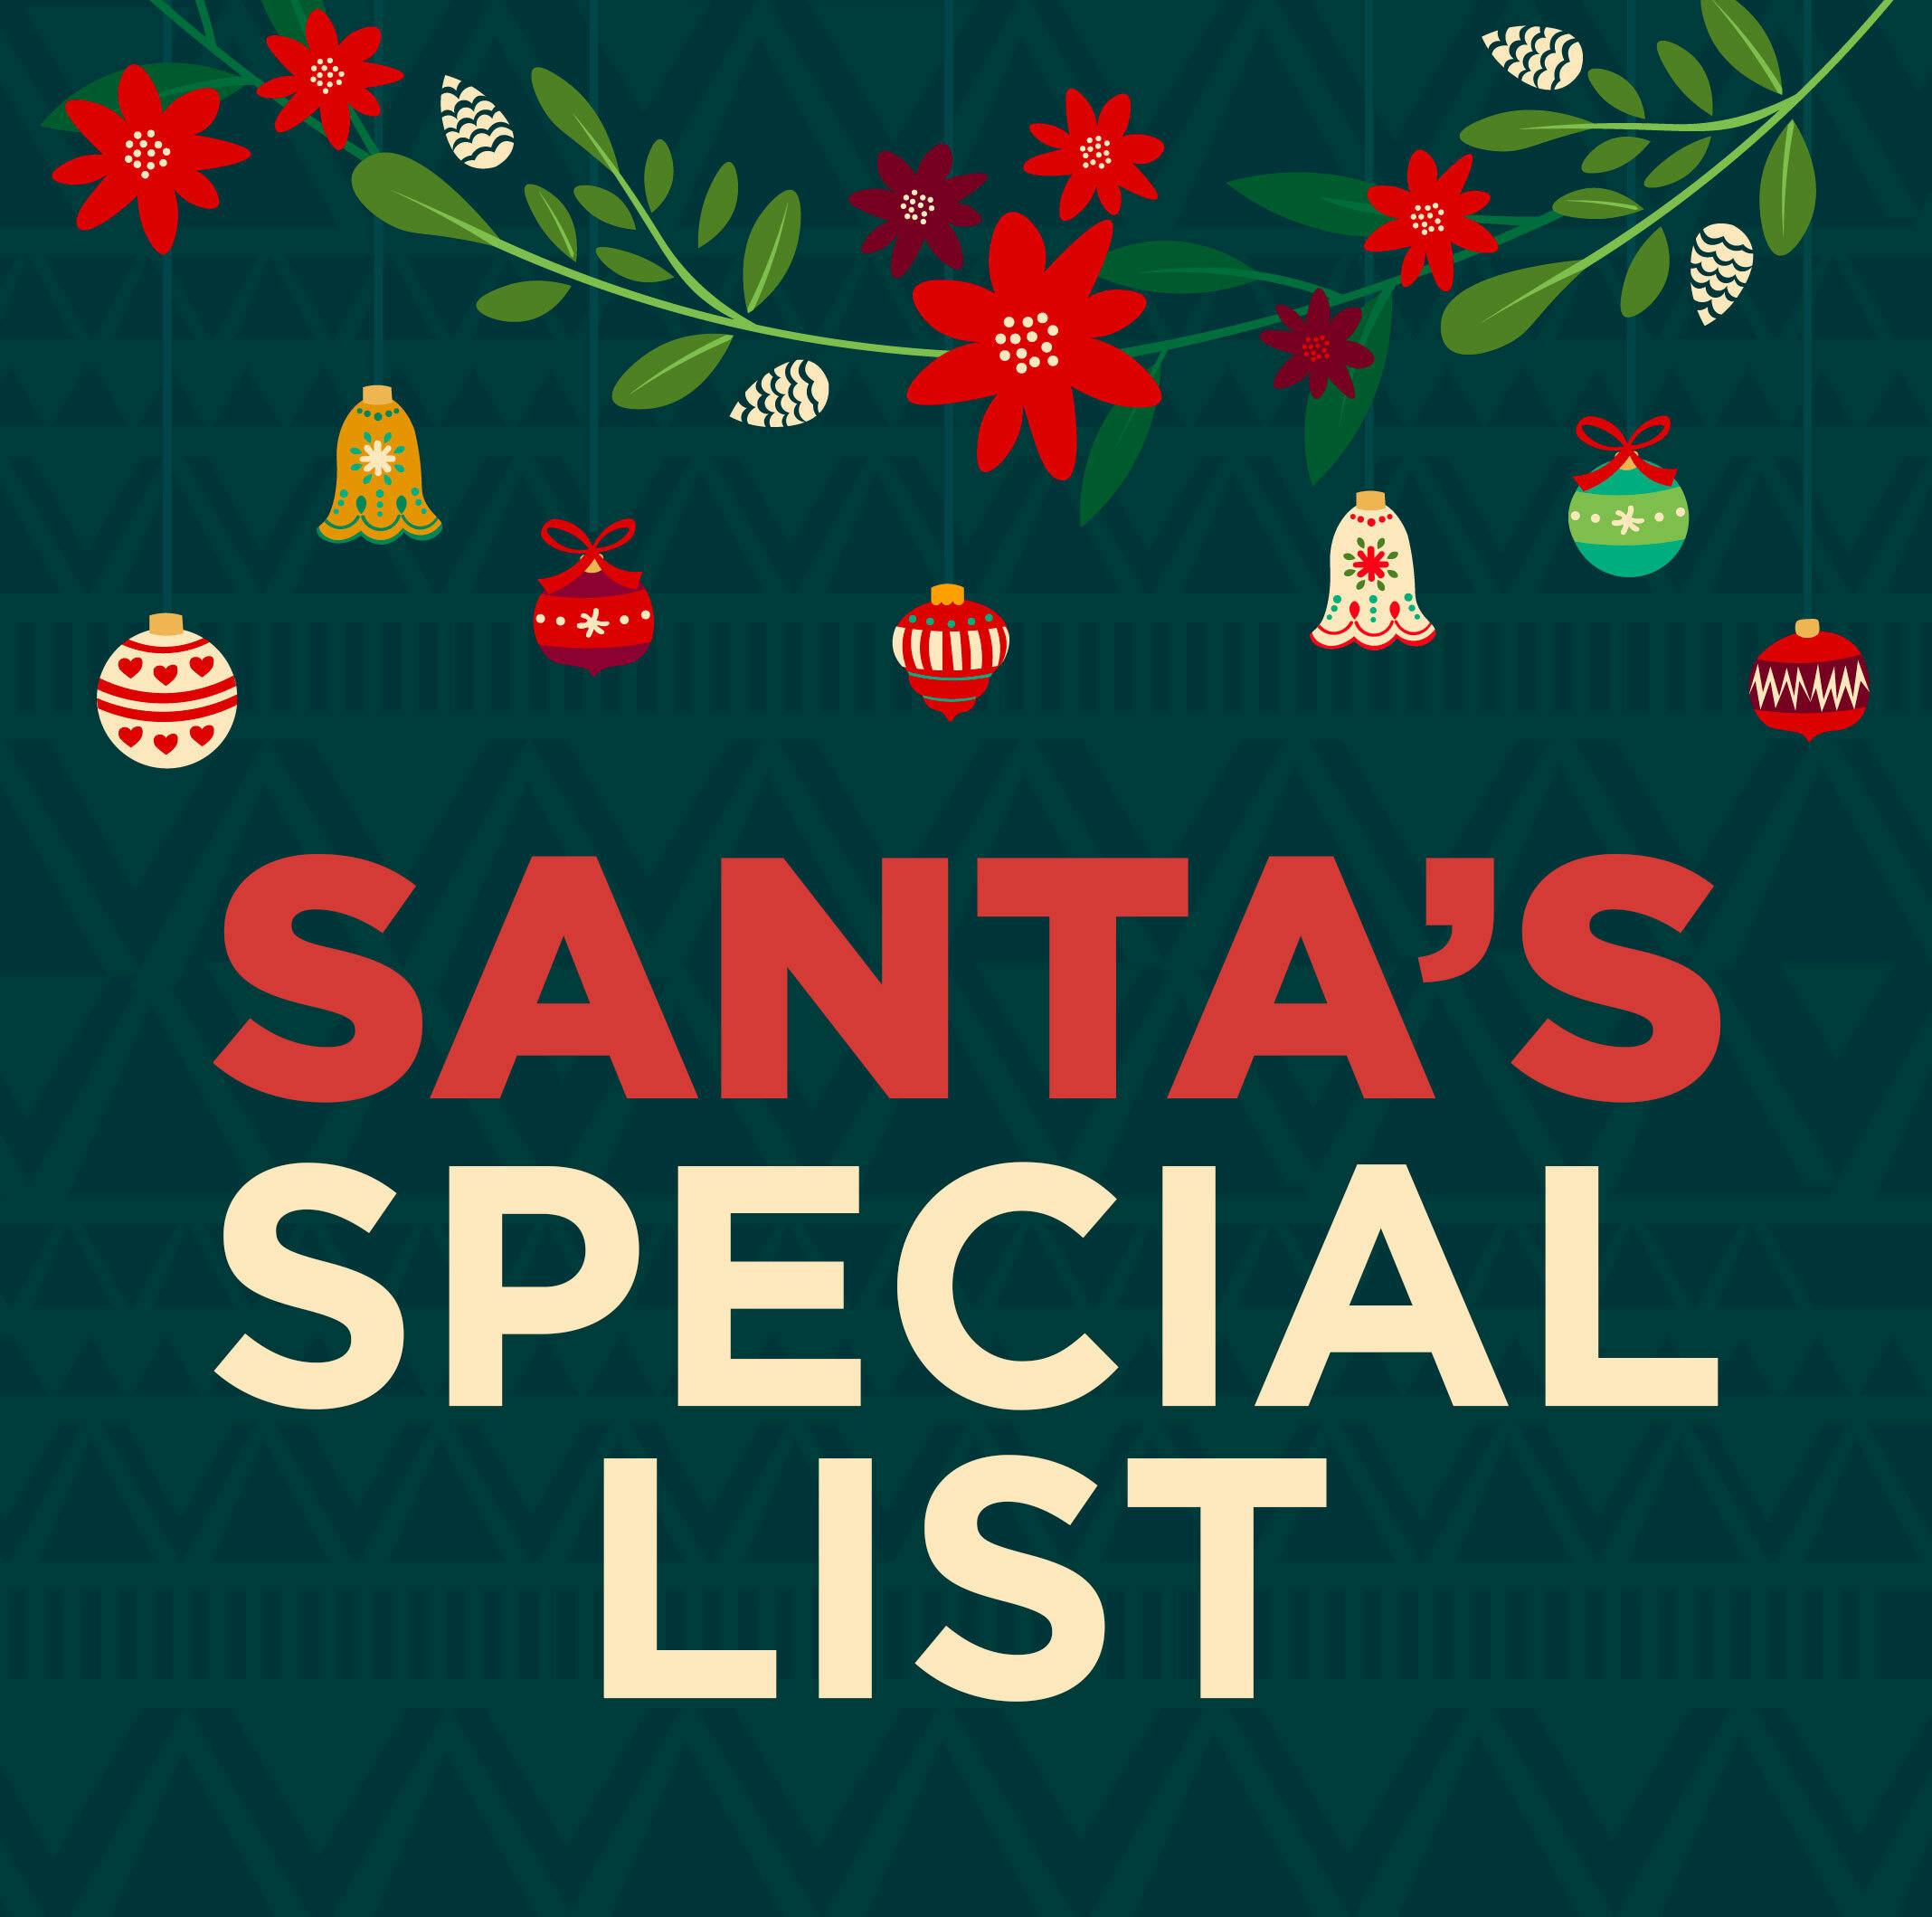 Santa's special list